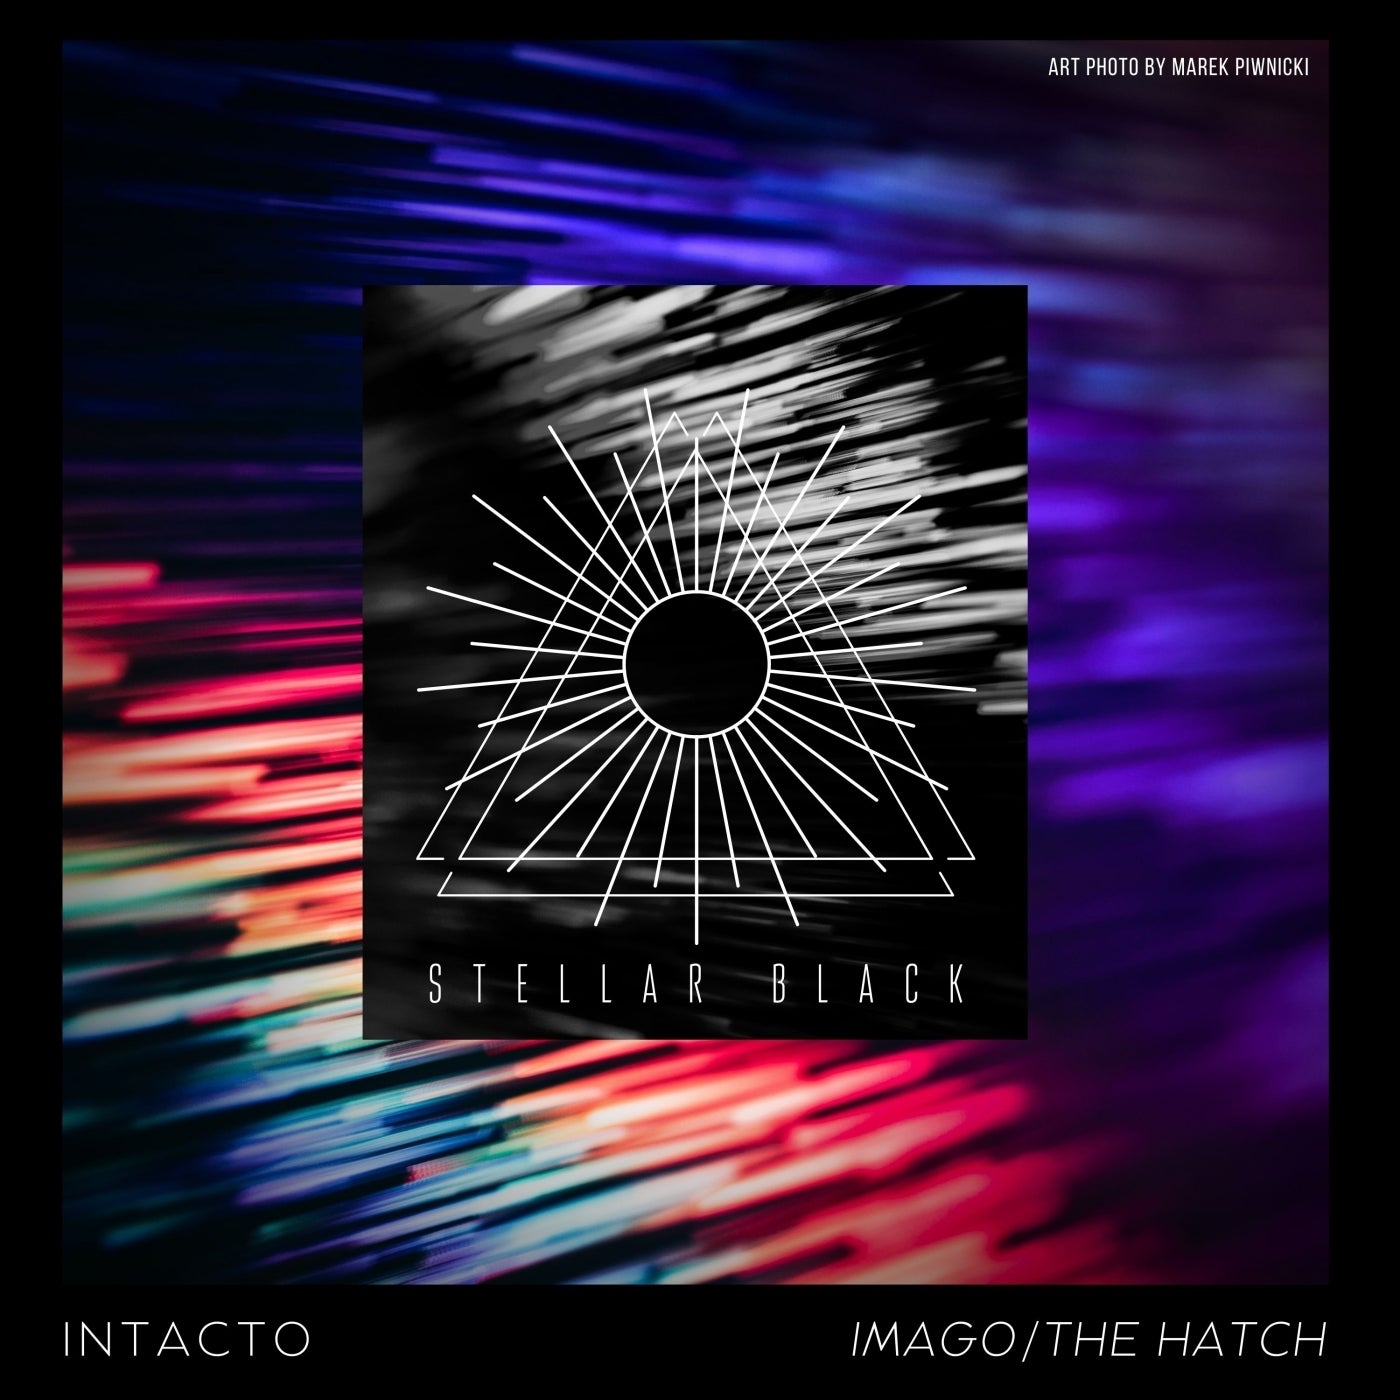 Imago/The Hatch